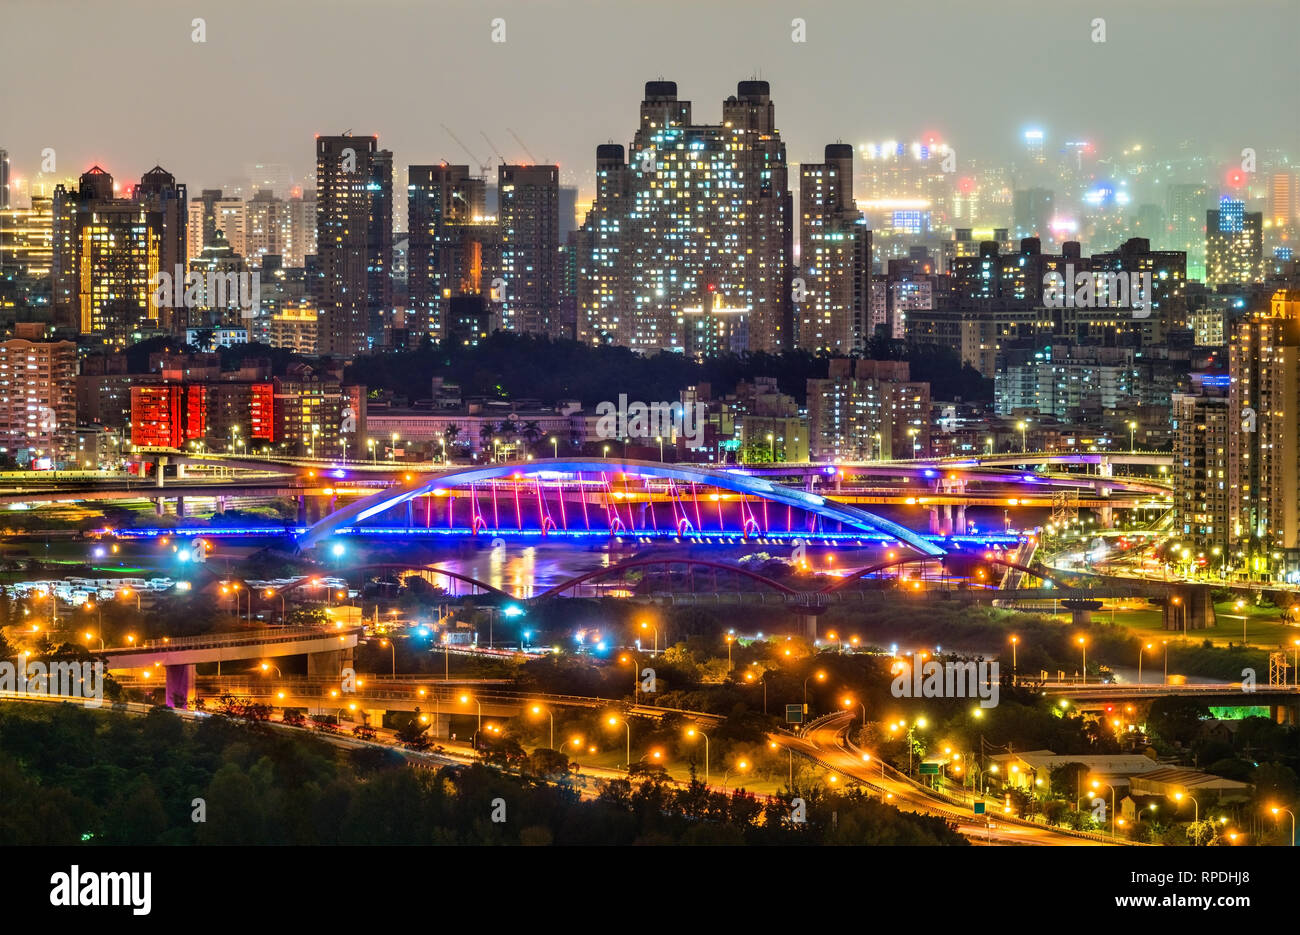 Night view of New Taipei City at Bitan, Taiwan Stock Photo